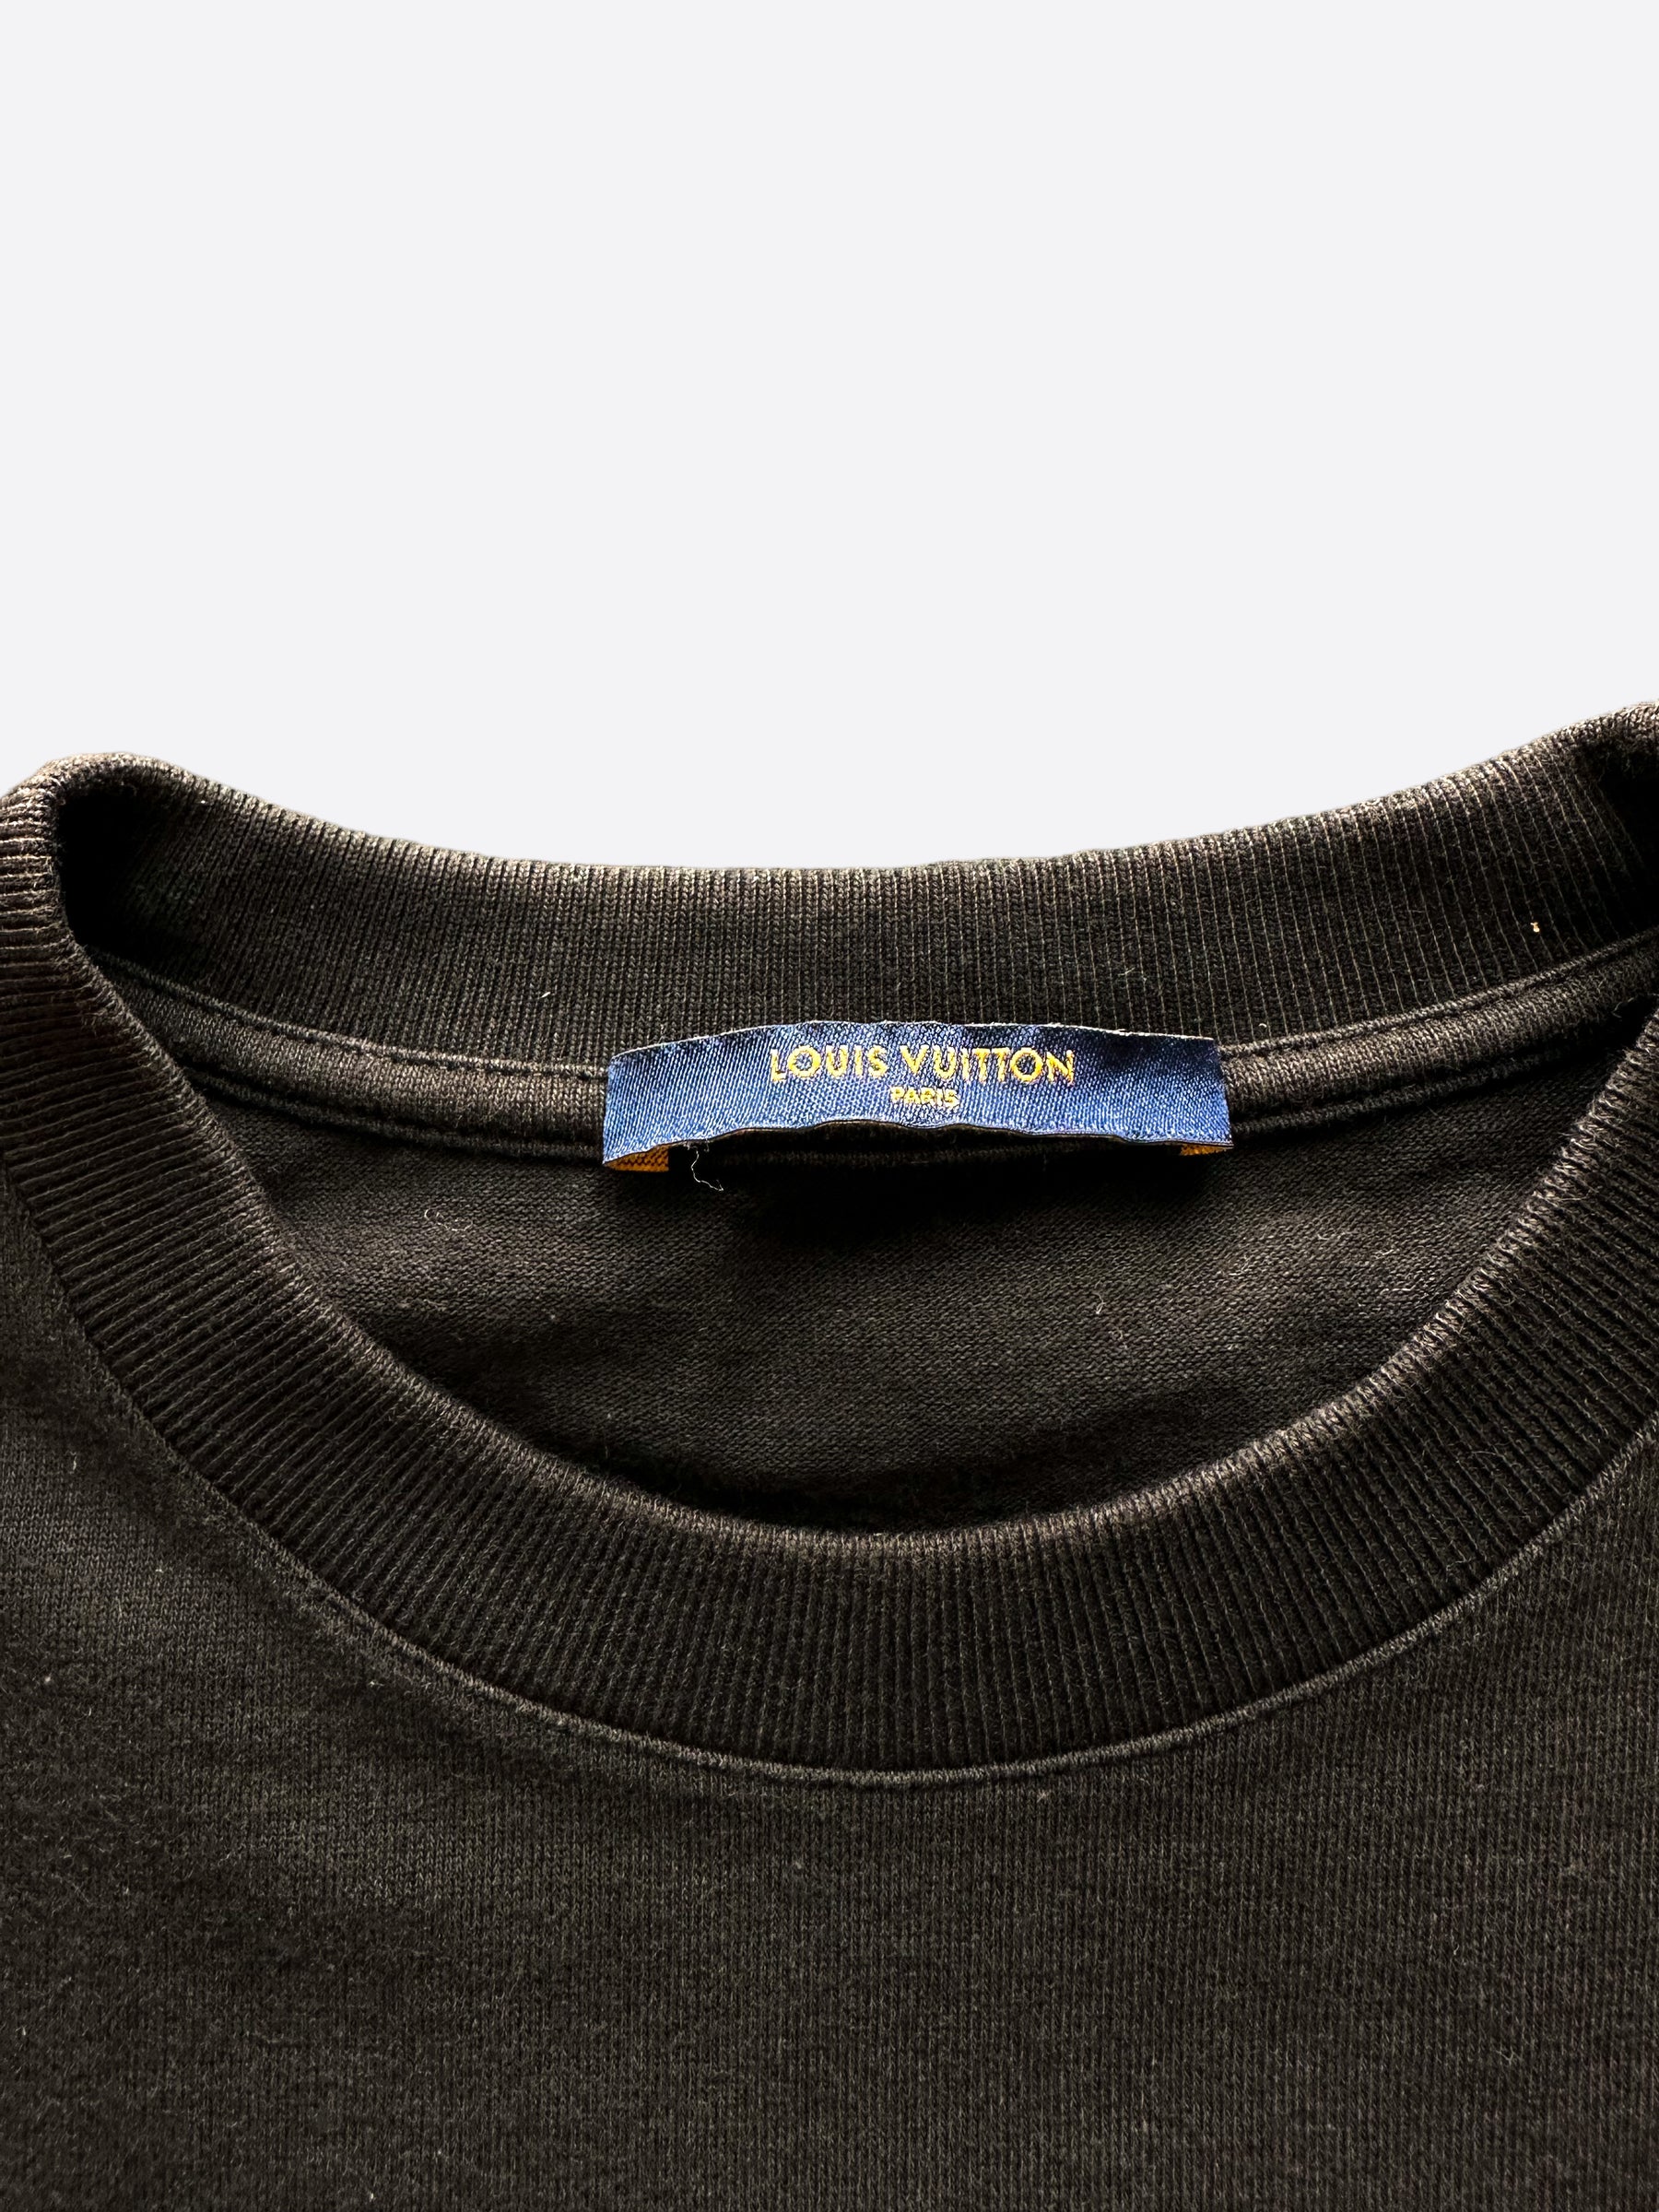 Louis Vuitton Black Barcode & Earth T-Shirt – Savonches